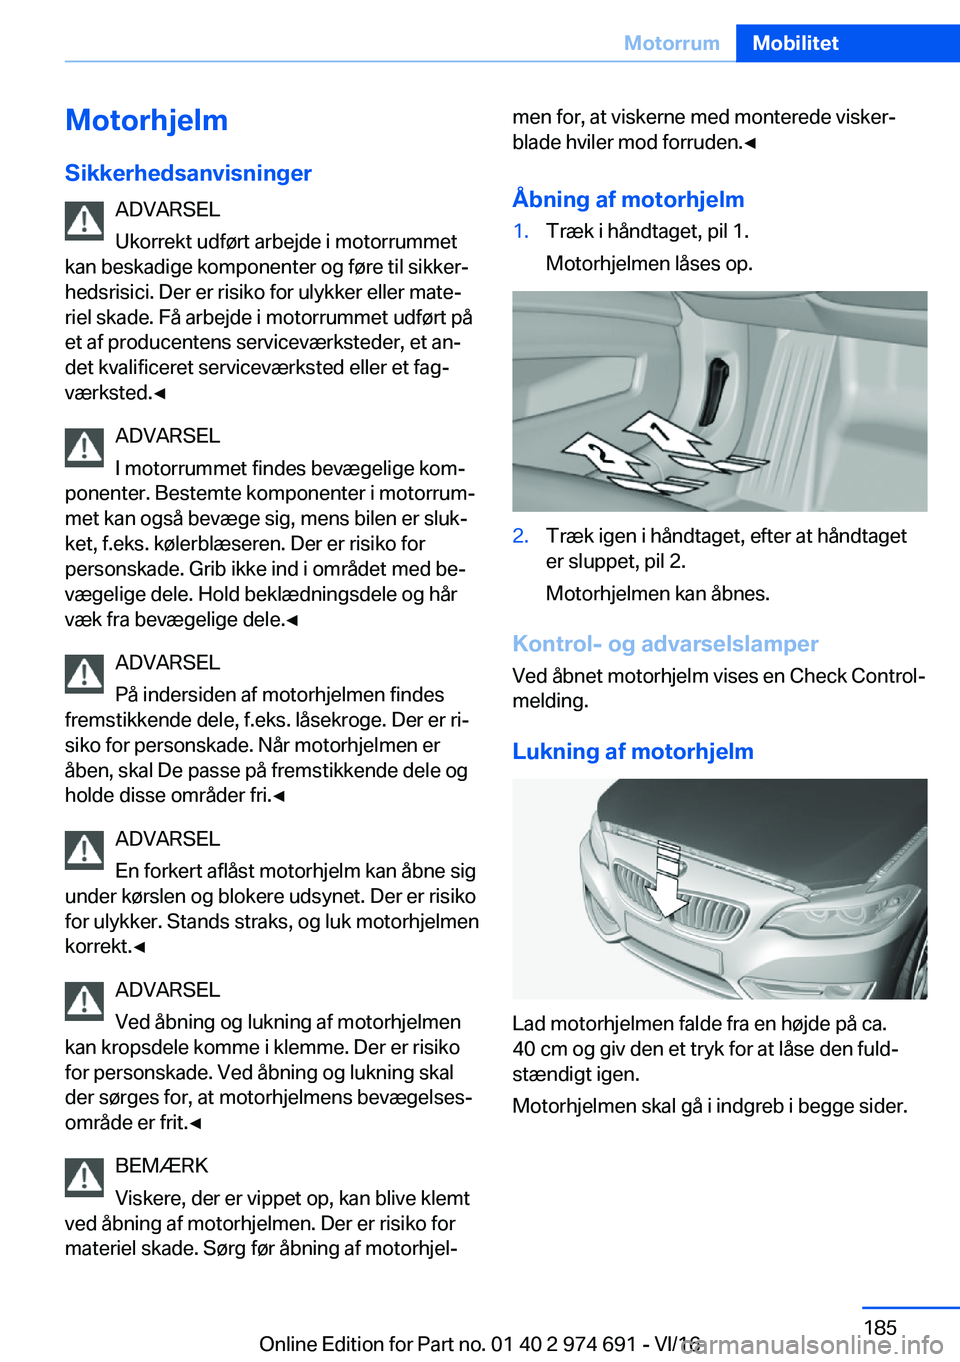 BMW M2 2017  InstruktionsbØger (in Danish) �M�o�t�o�r�h�j�e�l�m
�S�i�k�k�e�r�h�e�d�s�a�n�v�i�s�n�i�n�g�e�r �A�D�V�A�R�S�E�L
�U�k�o�r�r�e�k�t� �u�d�f�